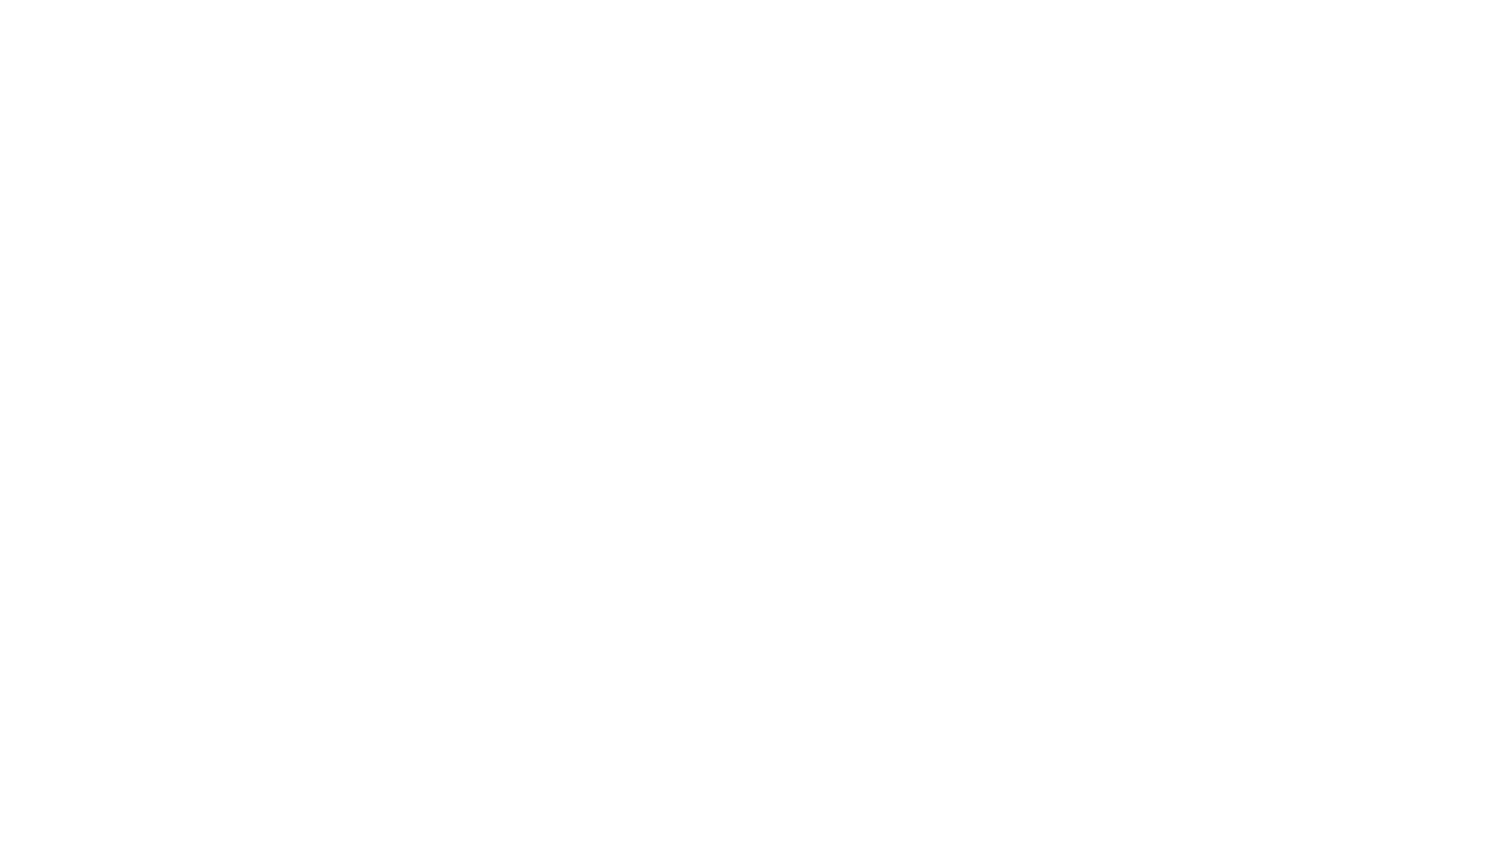 Bryant Cummings Photography